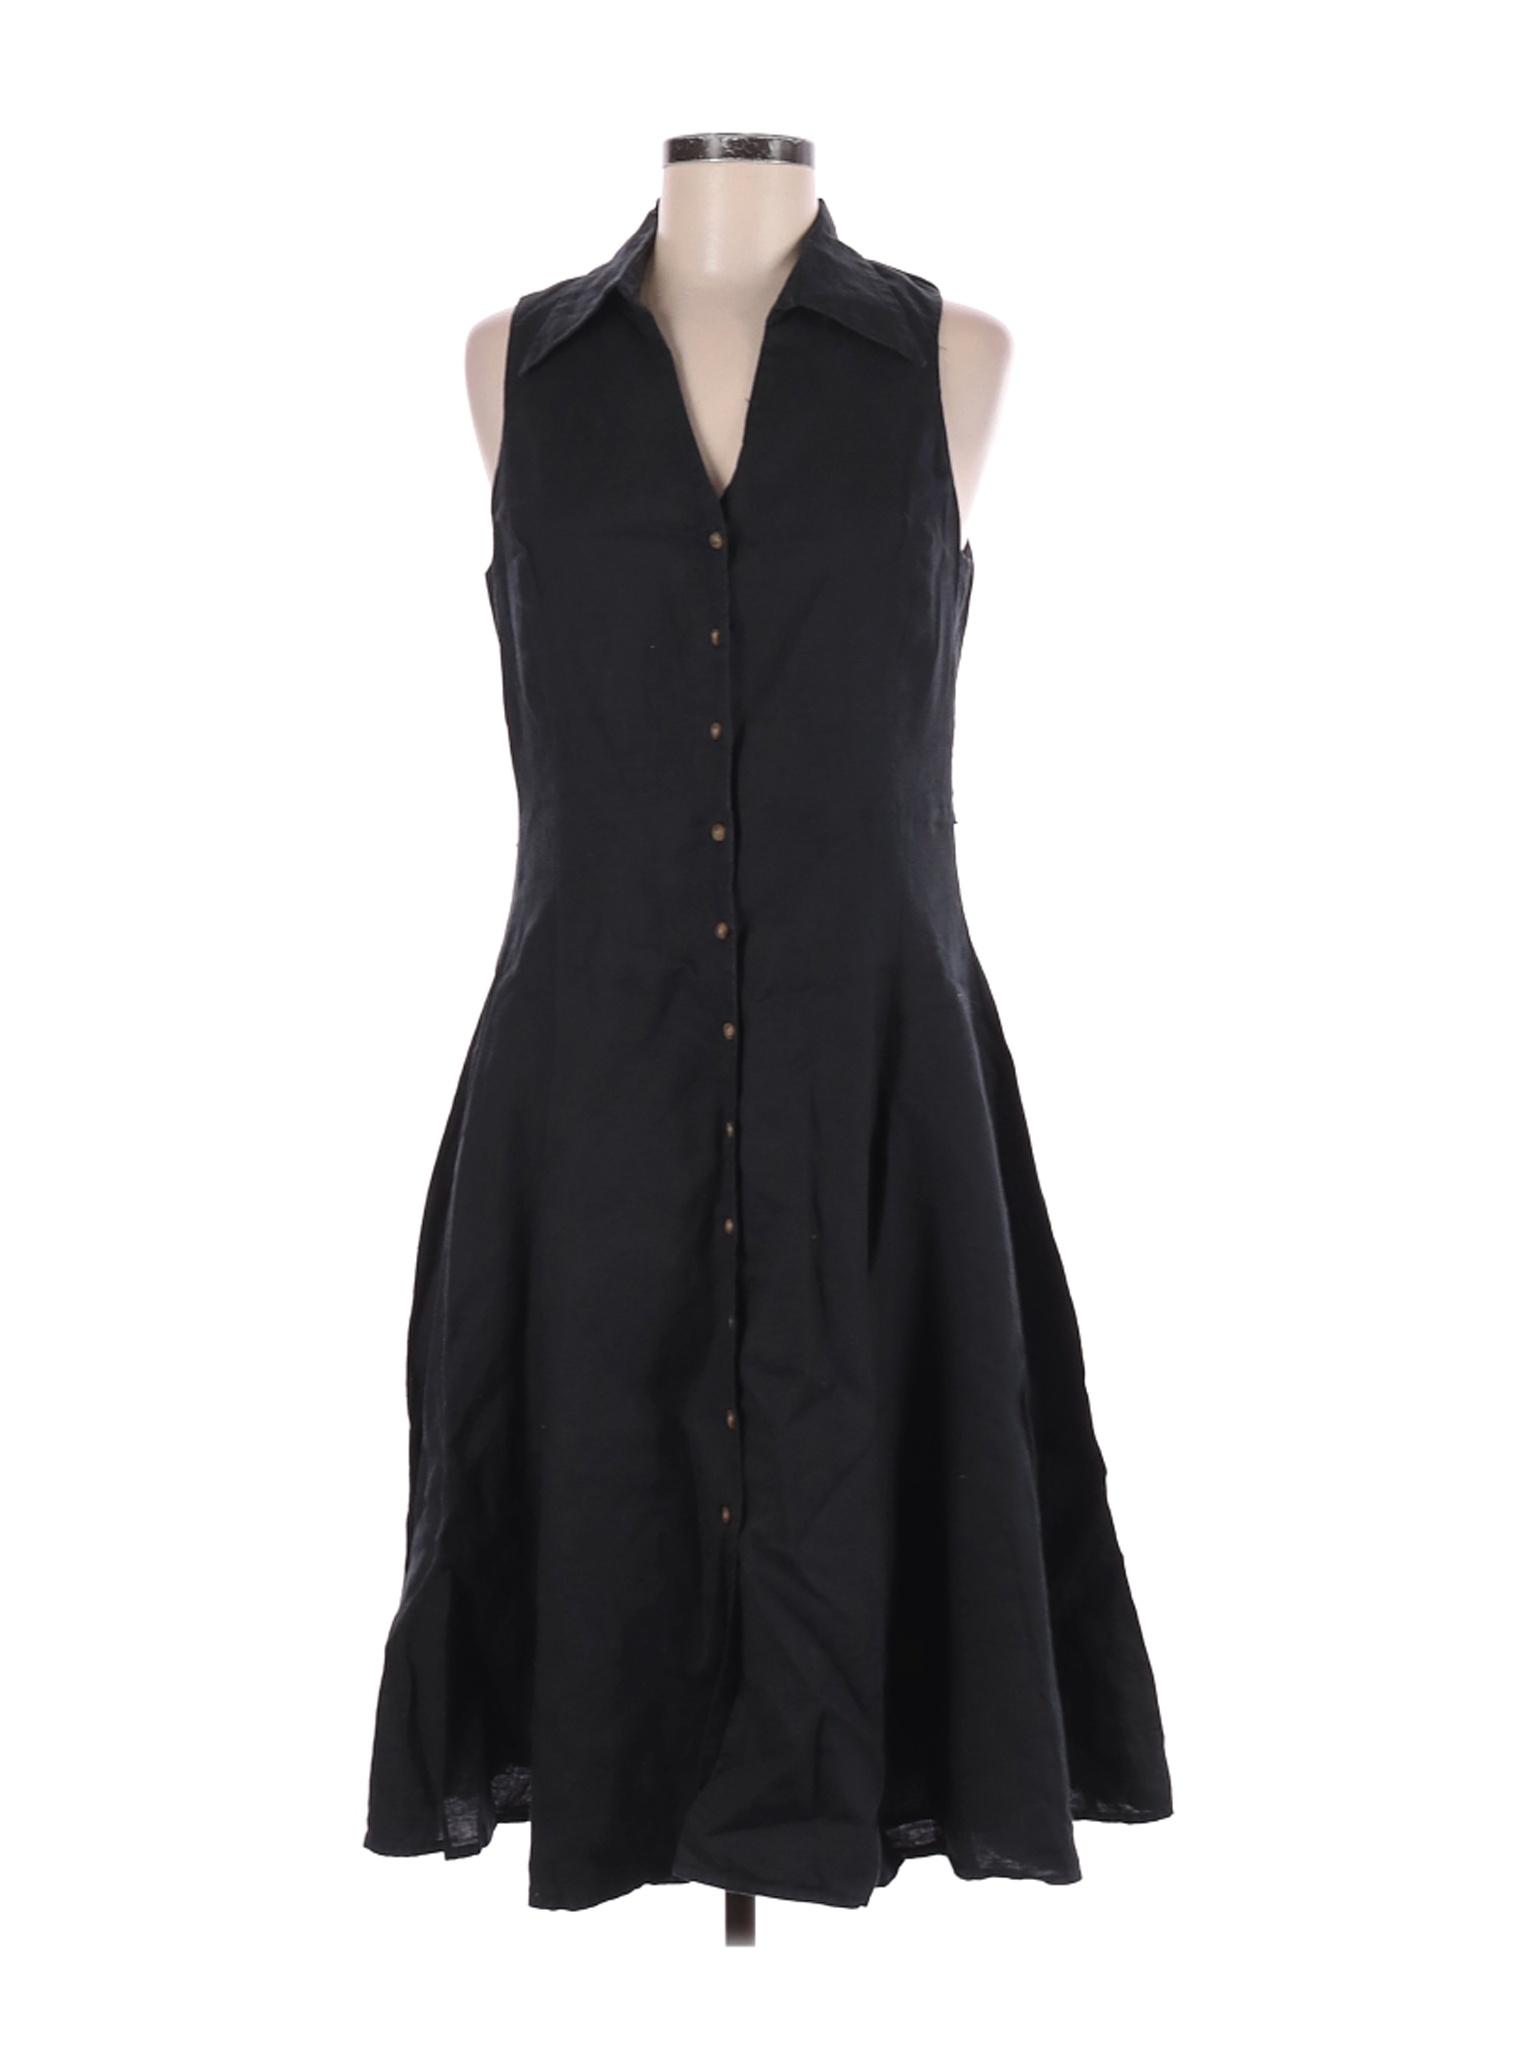 Jones New York Signature Women Black Casual Dress 8 | eBay